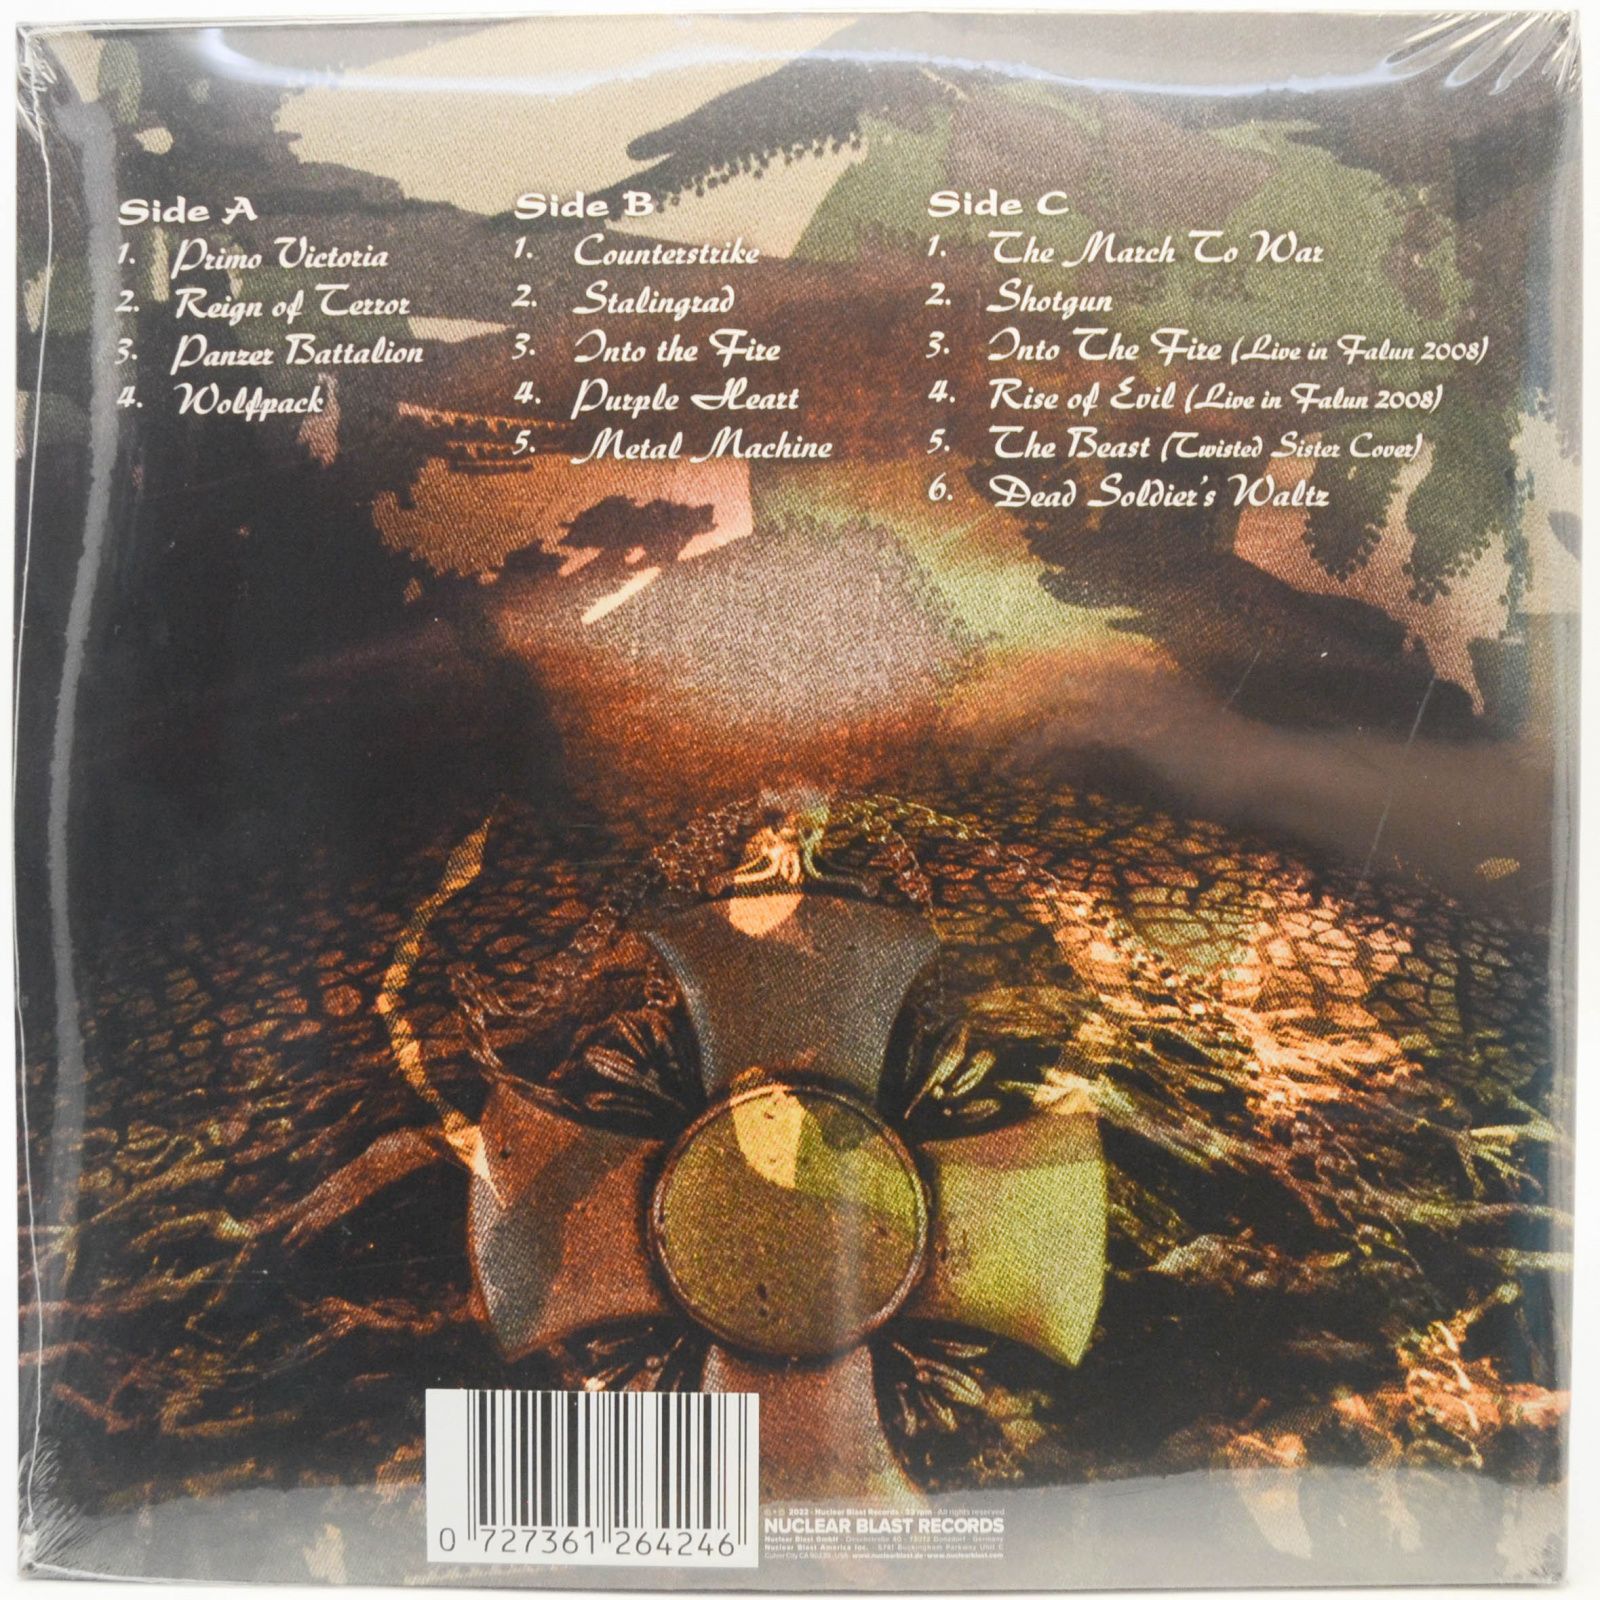 Sabaton — Primo Victoria Re-Armed (2LP, LP+LP Single Sided), 2005